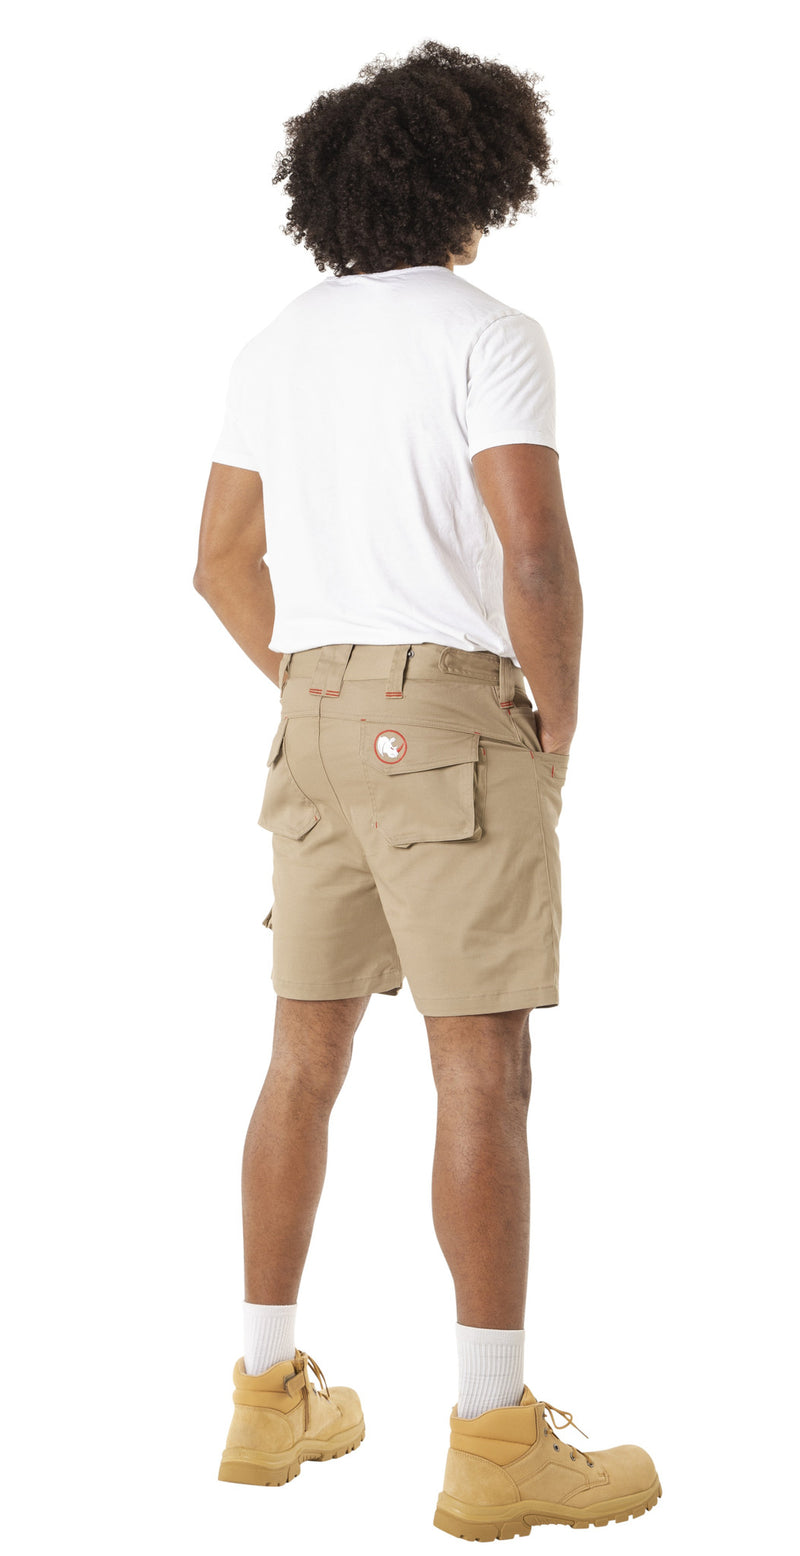 Mens Work Shorts Flexible Durable Tough - Beige Khaki [ SIZE 34]